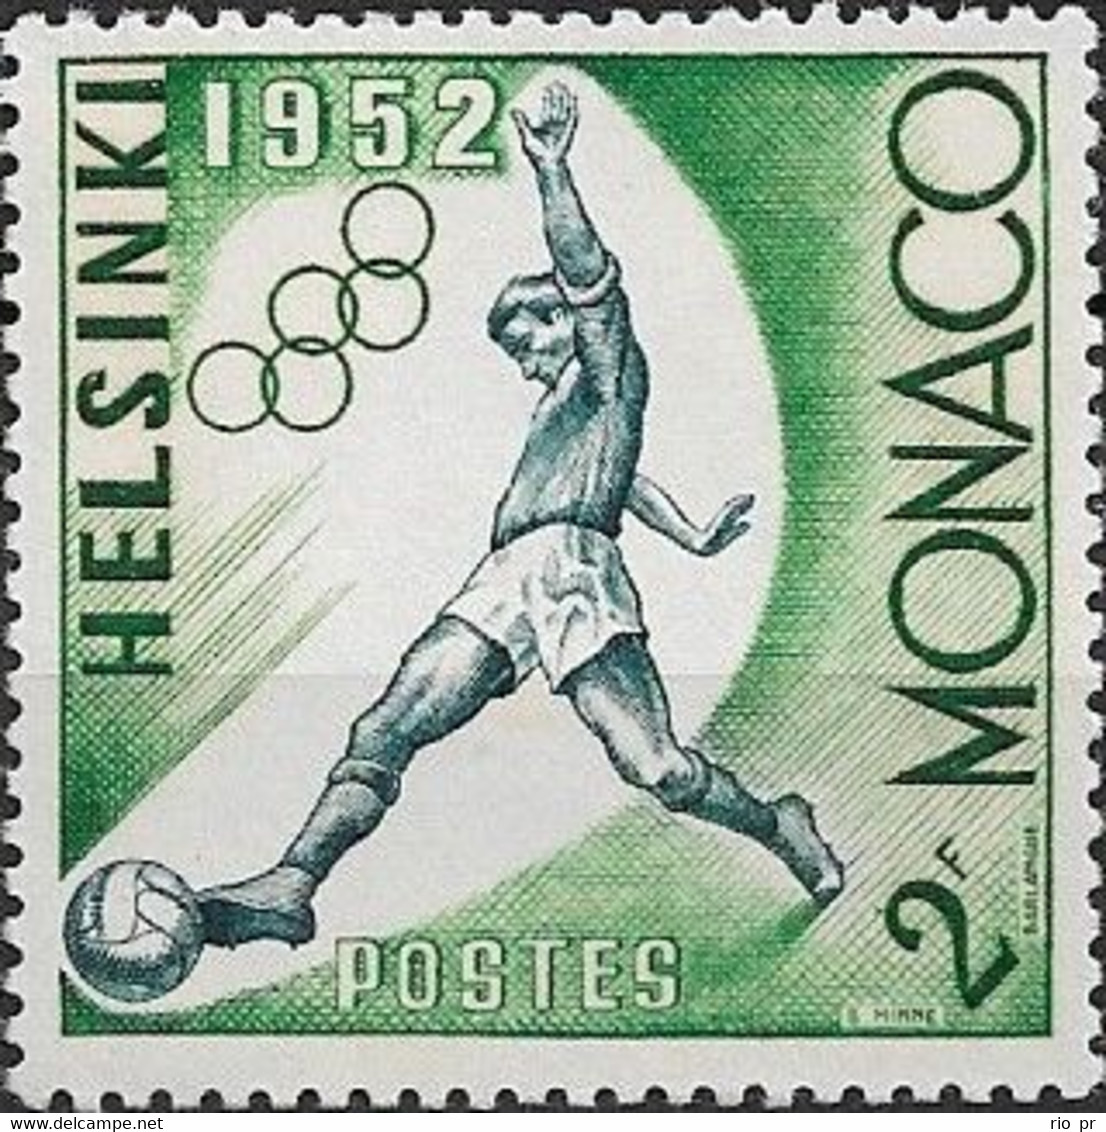 MONACO - HELSINKI'52 SUMMER OLYMPIC GAMES (SOCCER, 2 Fr) 1953 - MNH - Ete 1952: Helsinki